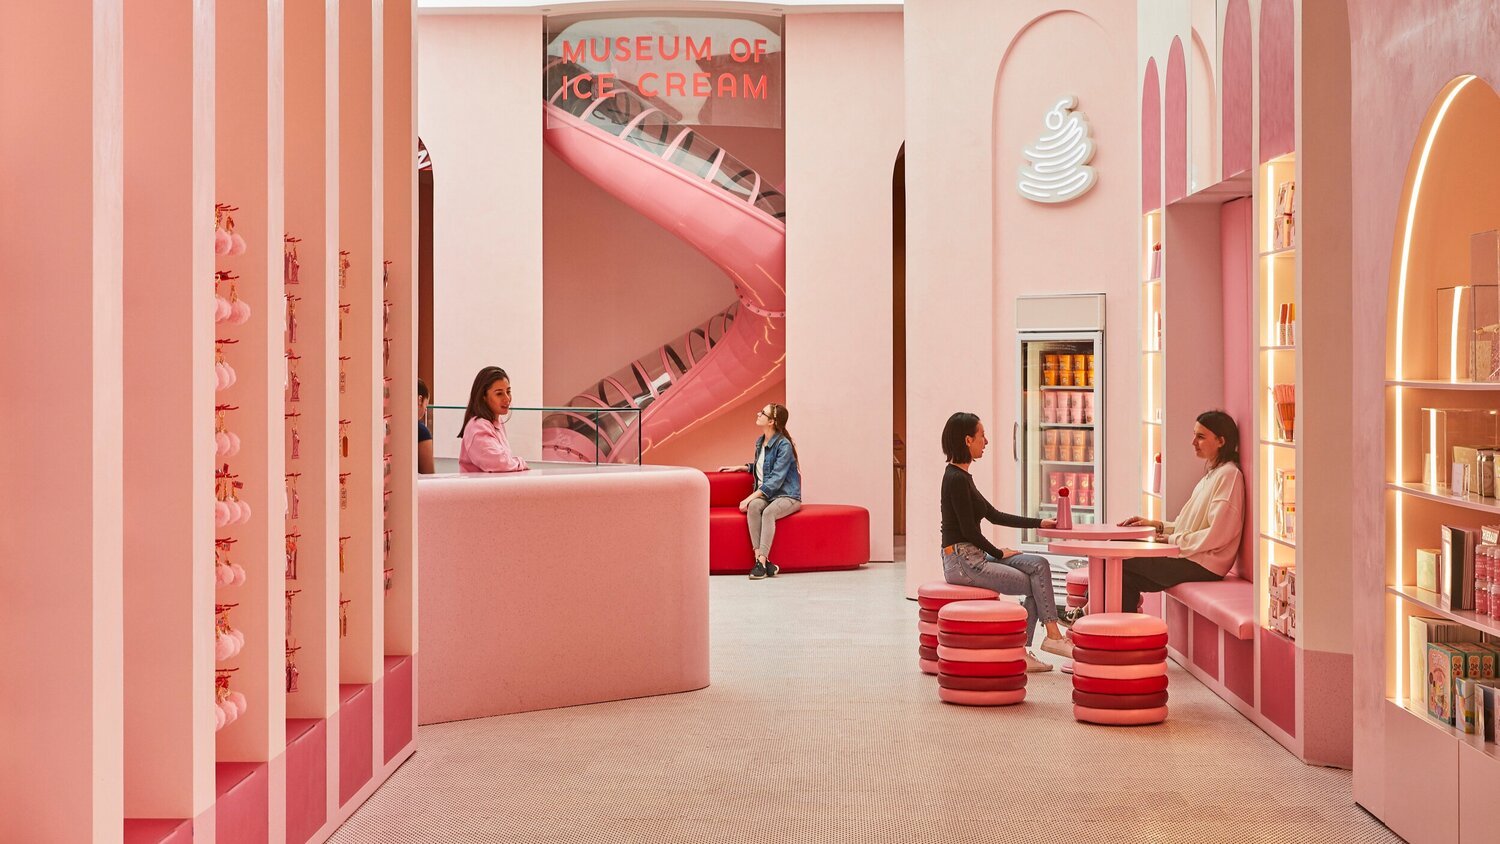 Visit New York City — Museum of Ice Cream